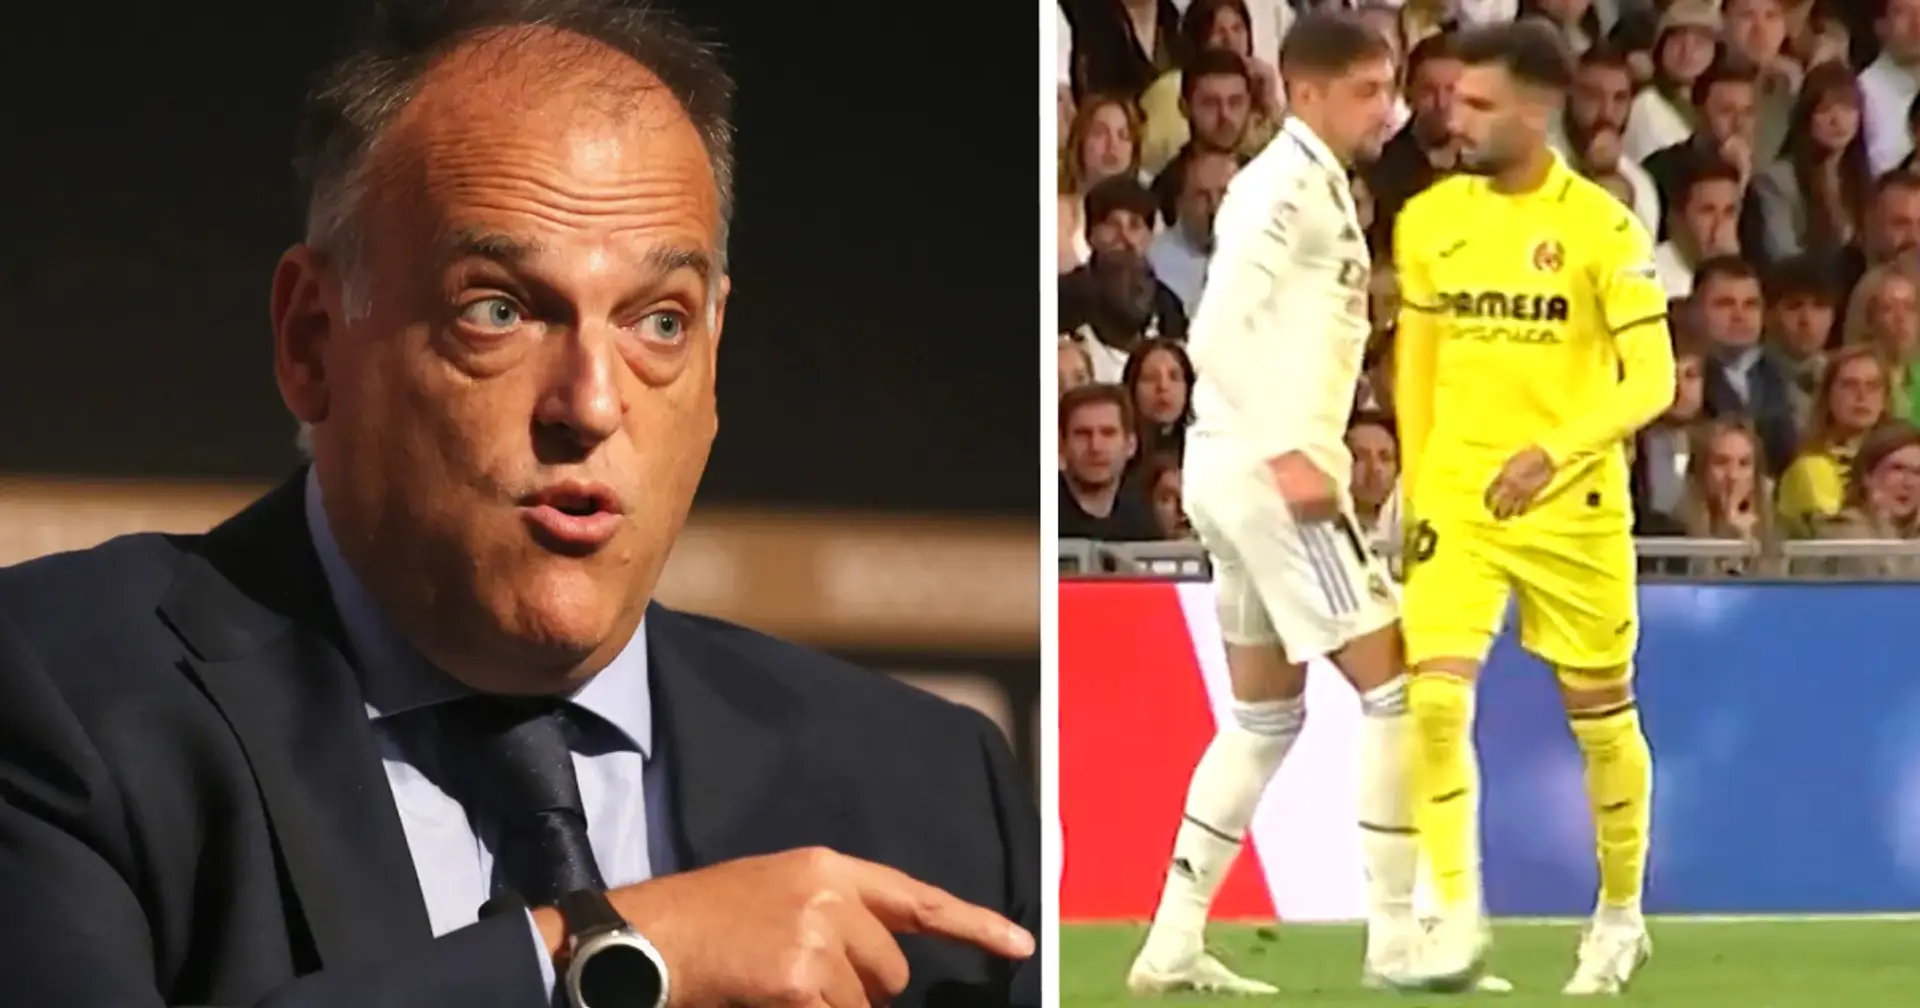 La Liga president Tebas reacts to Valverde 'punching' Baena